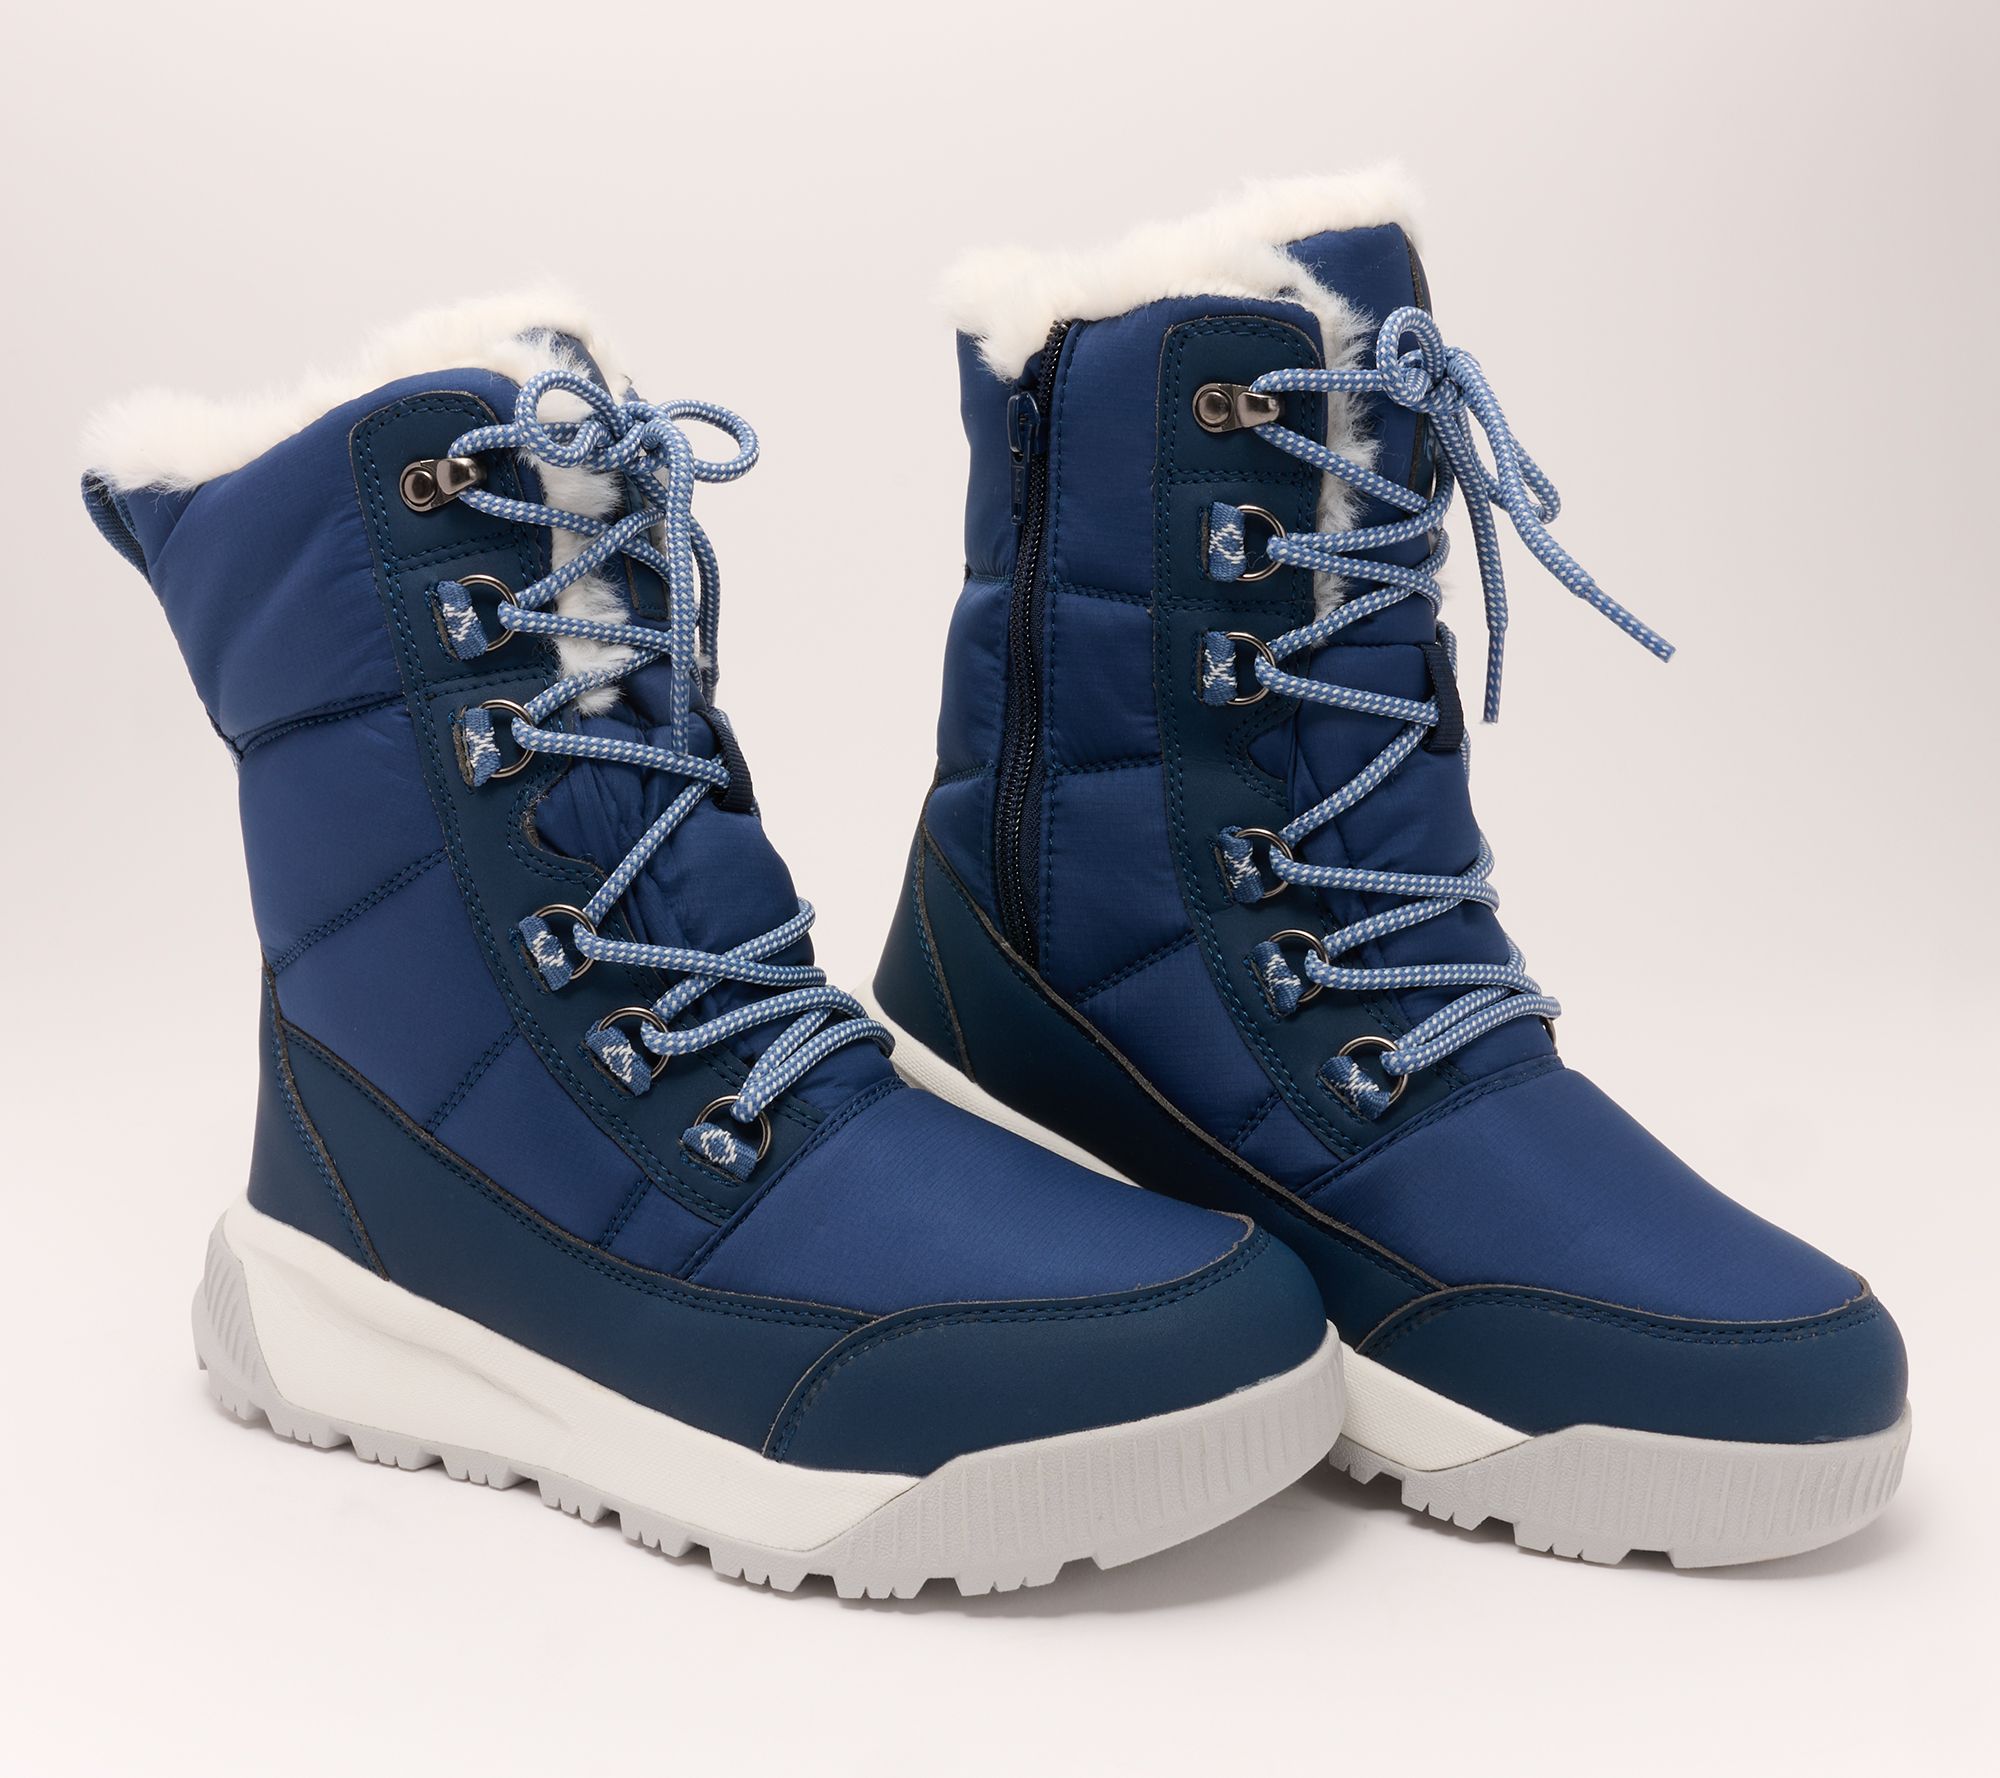 BooJoy Winter Boots Price